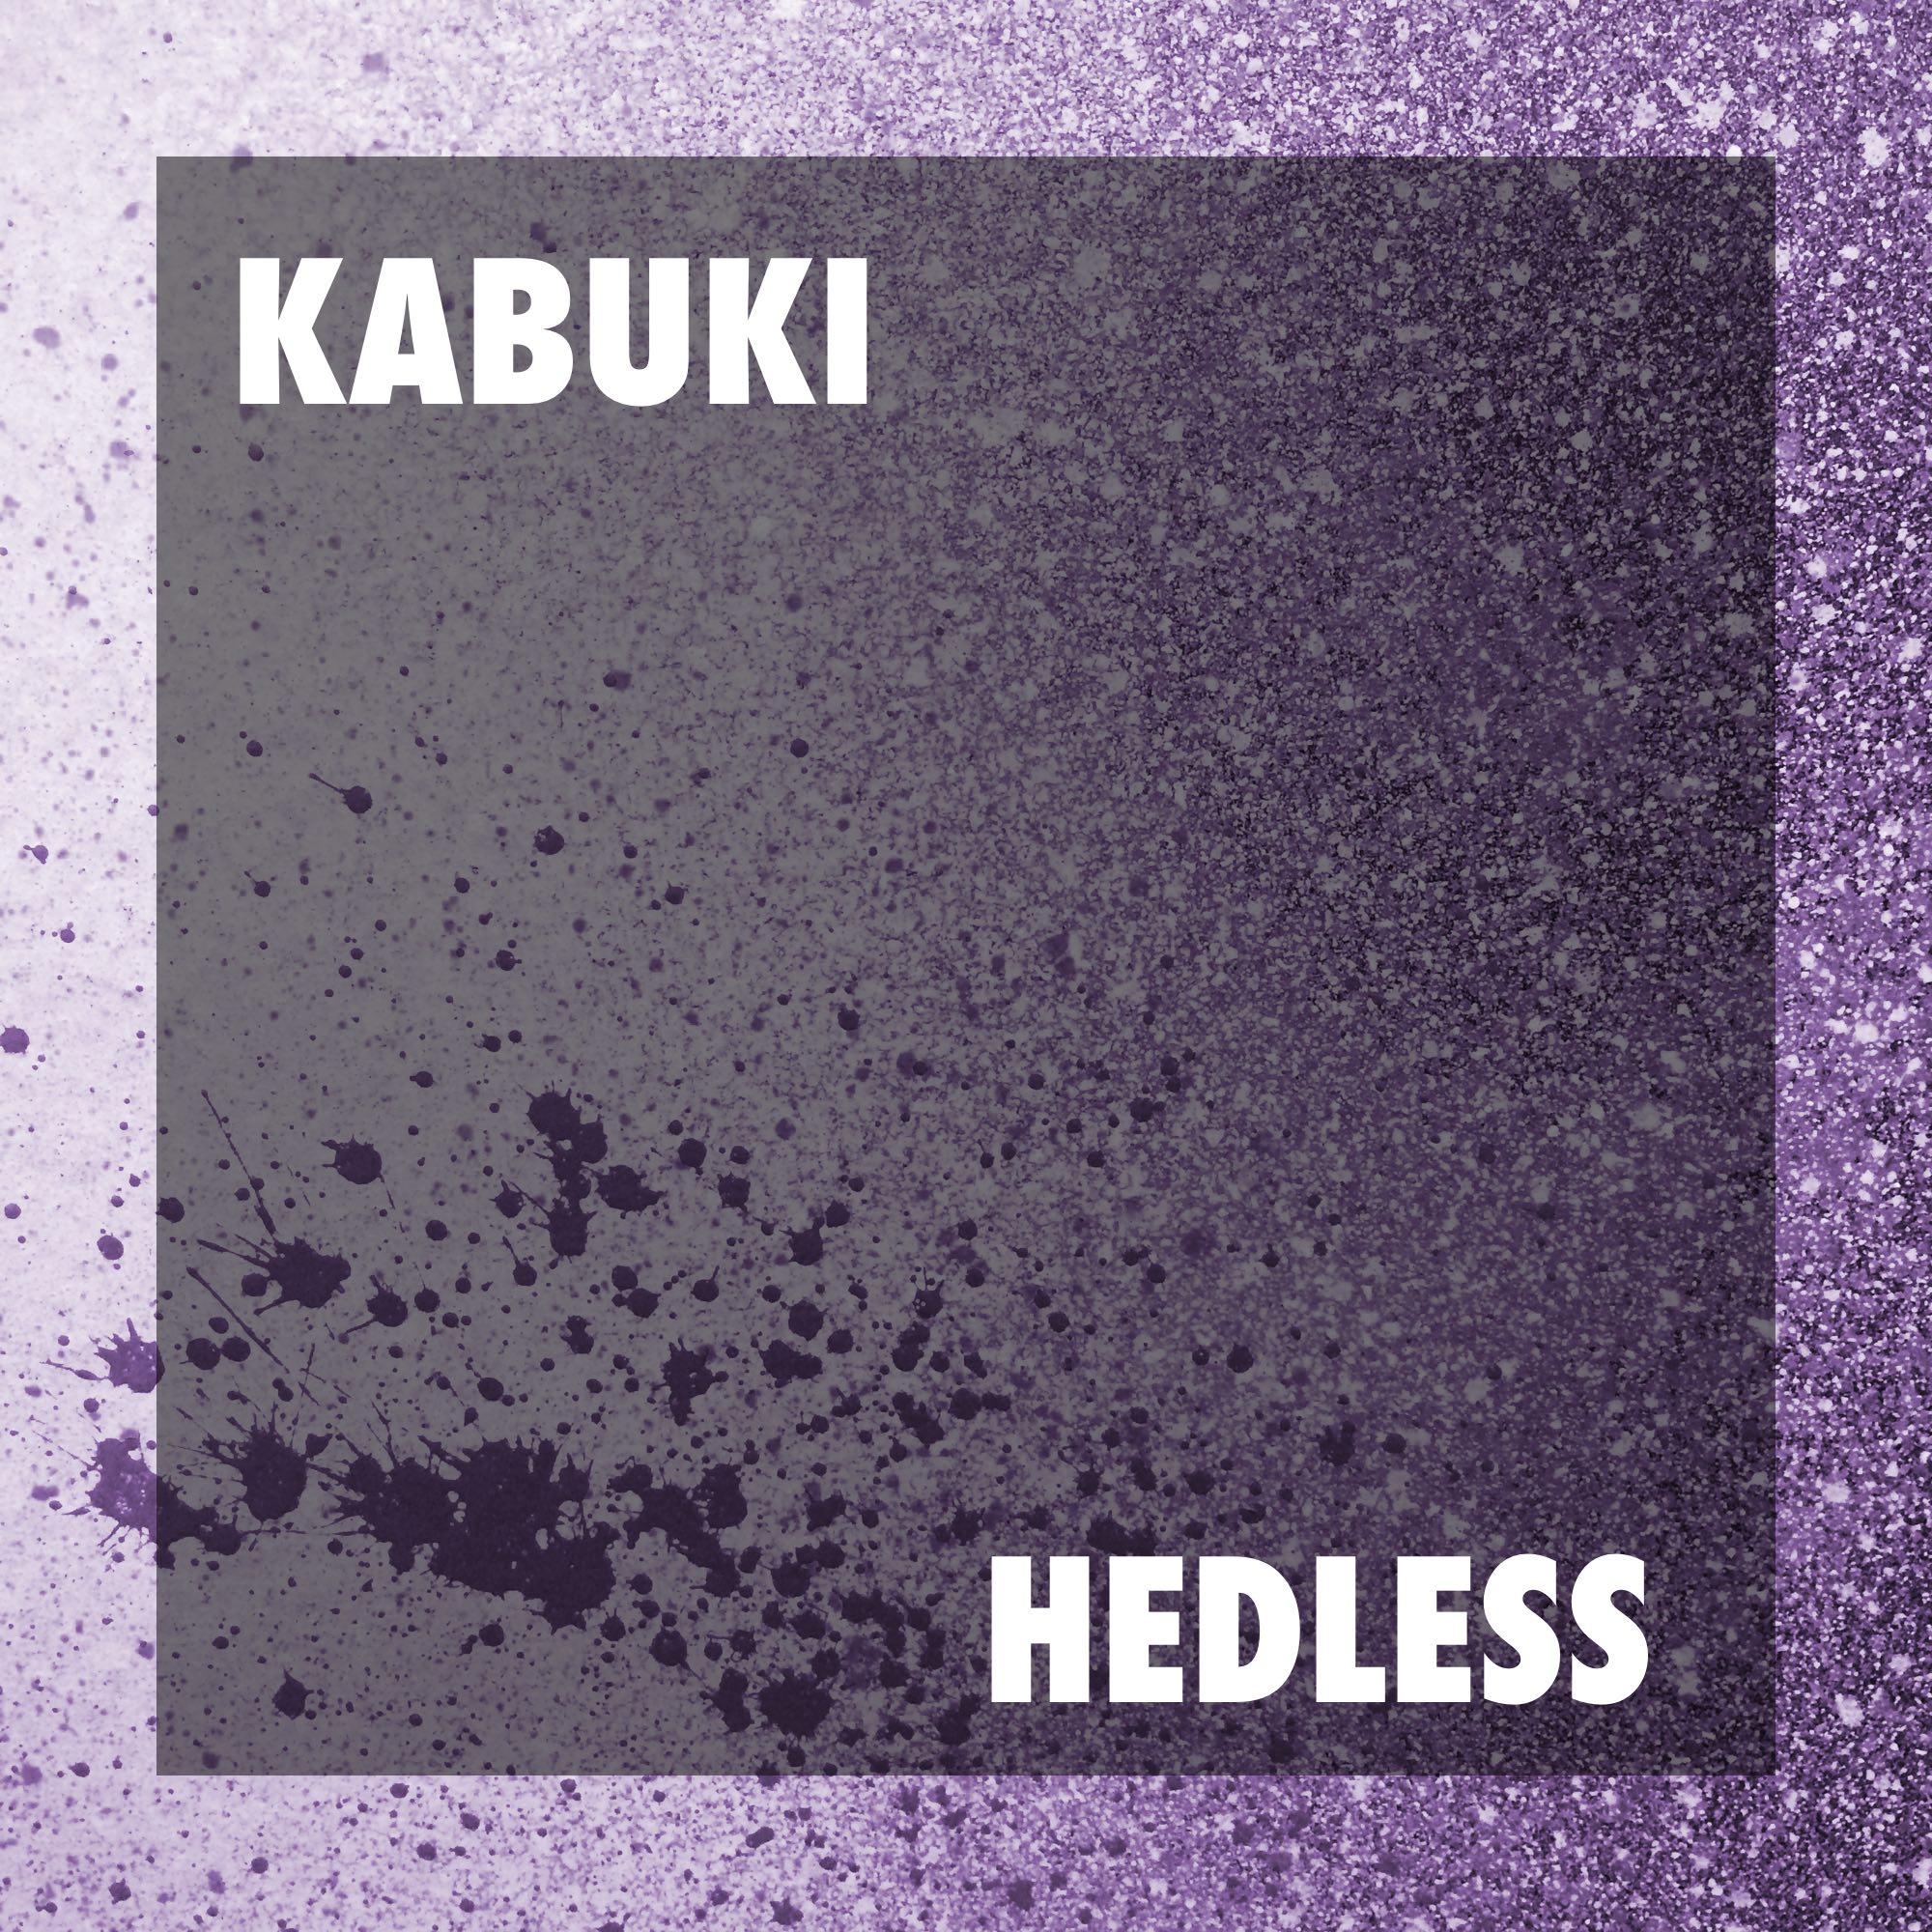 Hedless by Kabuki 5/7